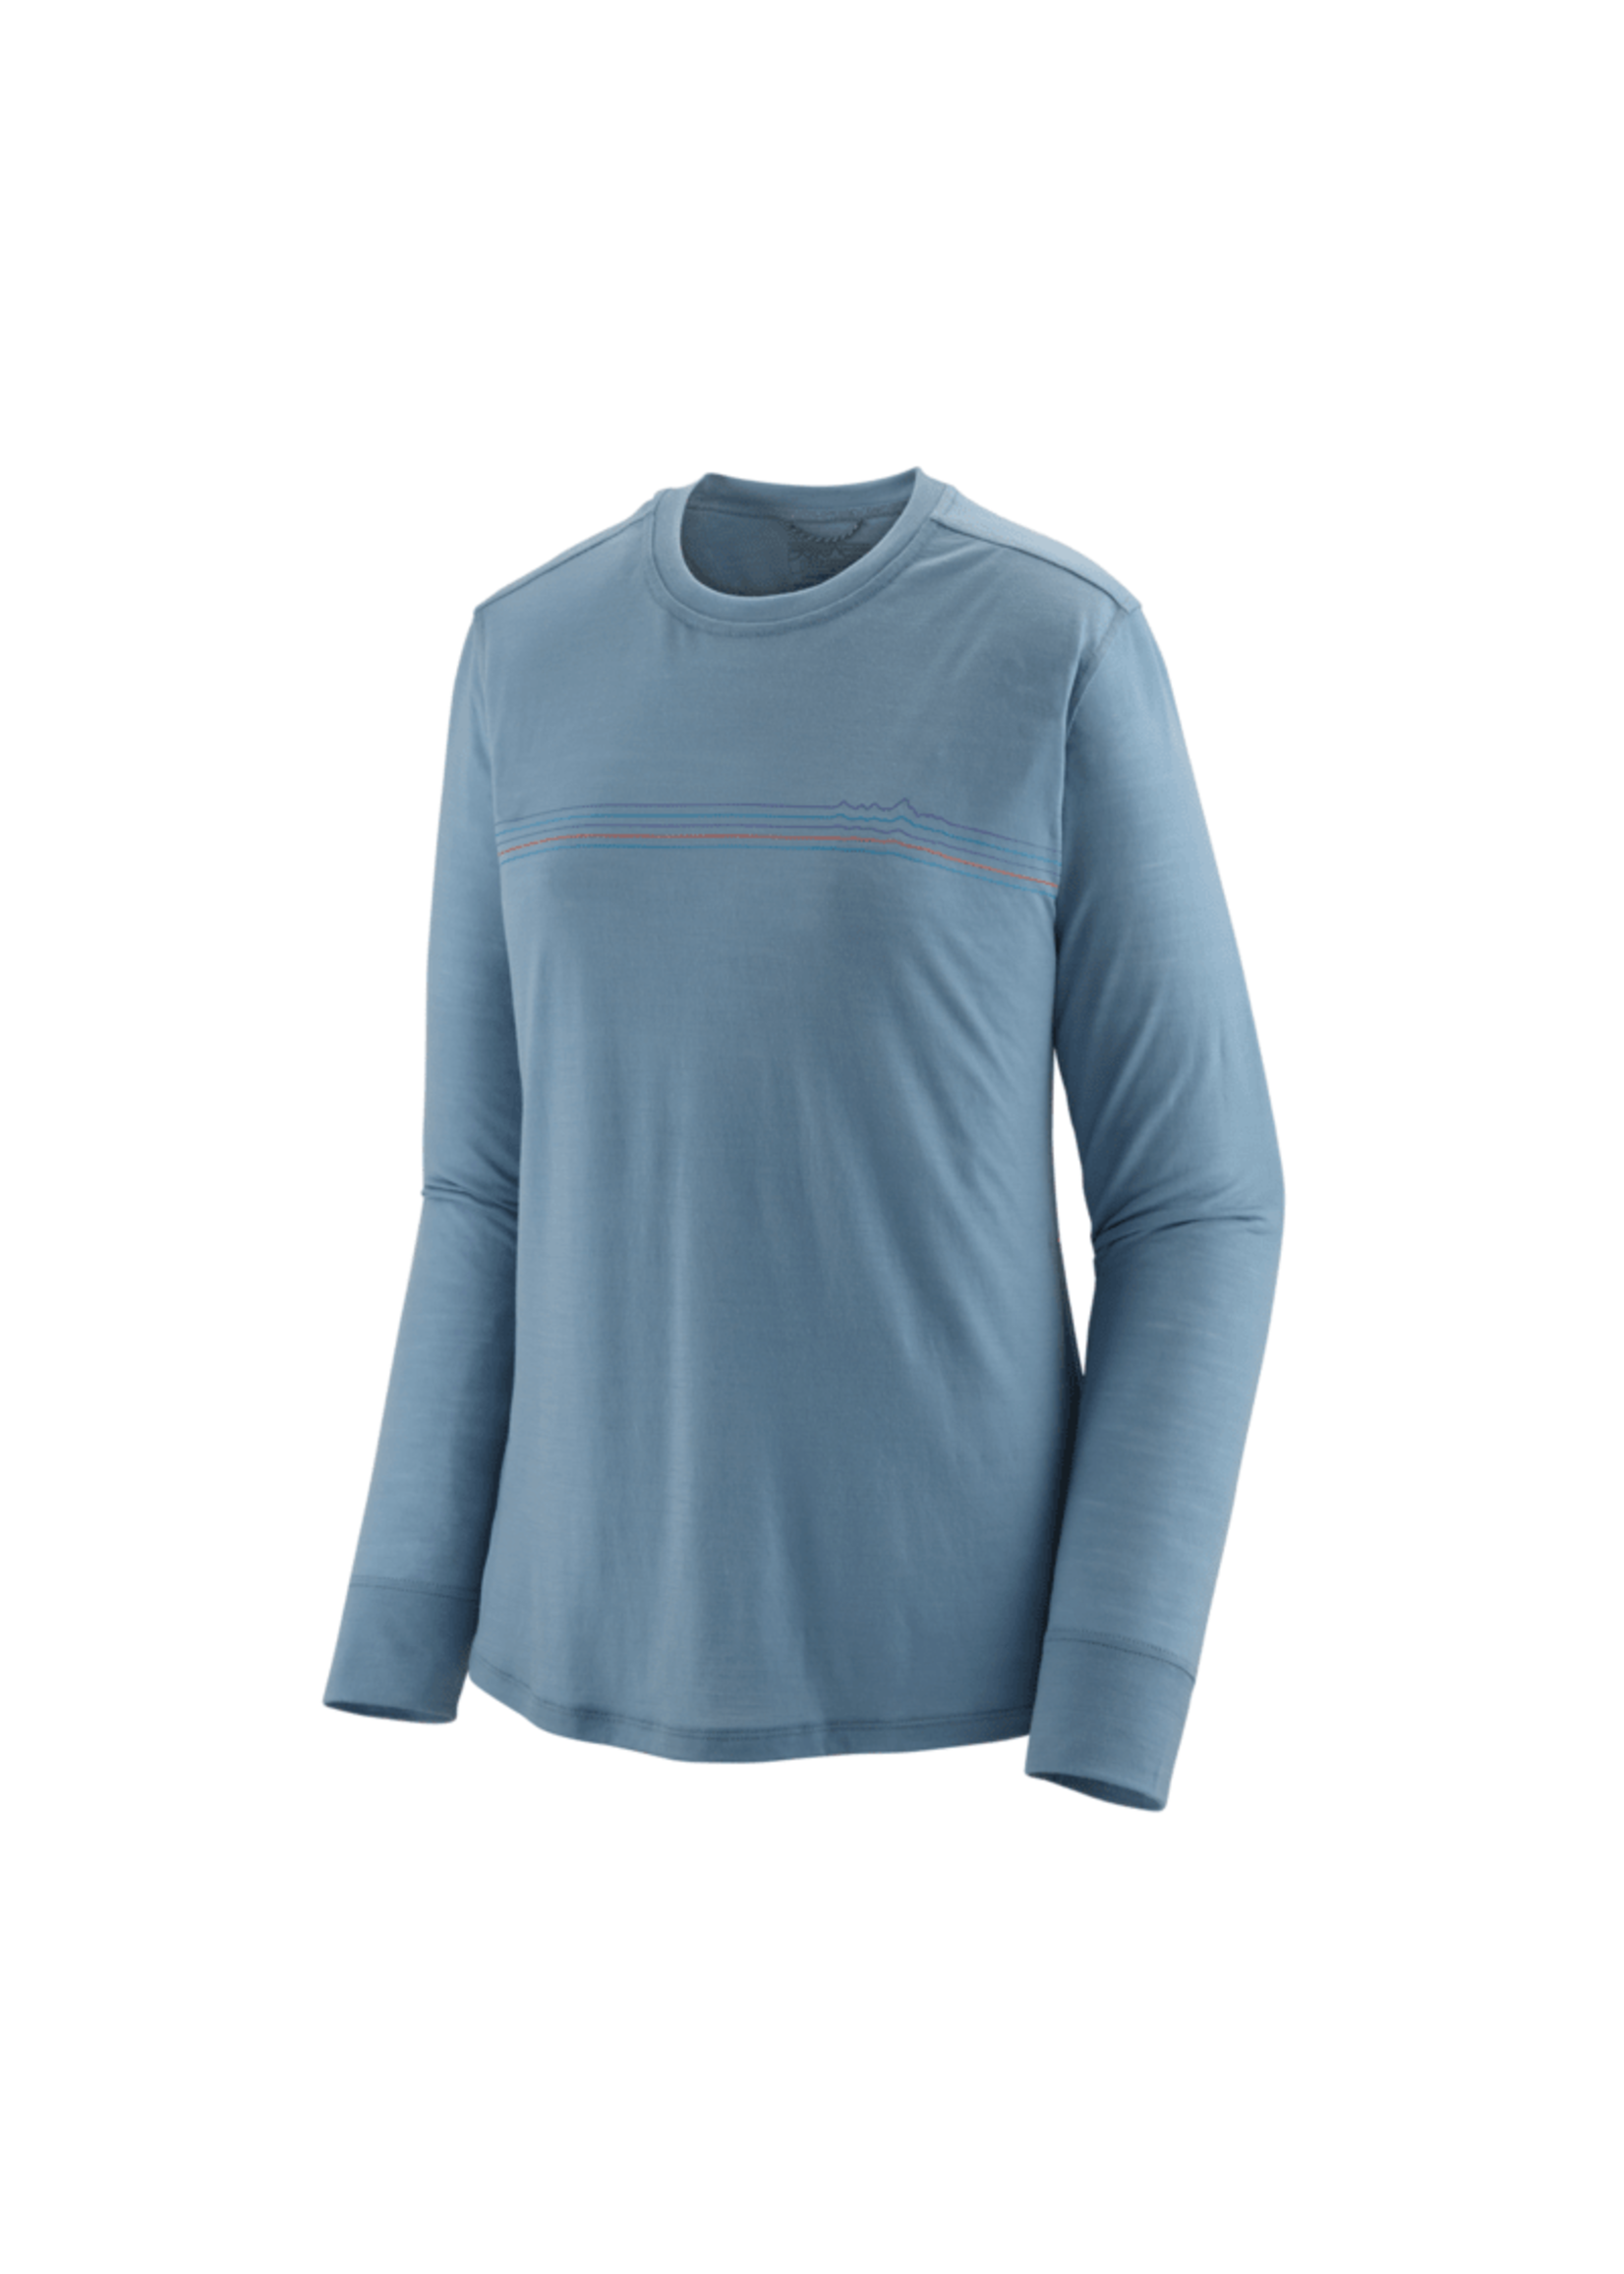 Patagonia Women's Long Sleeve Cap Cool Merino Blend Graphic Shirt - Grey